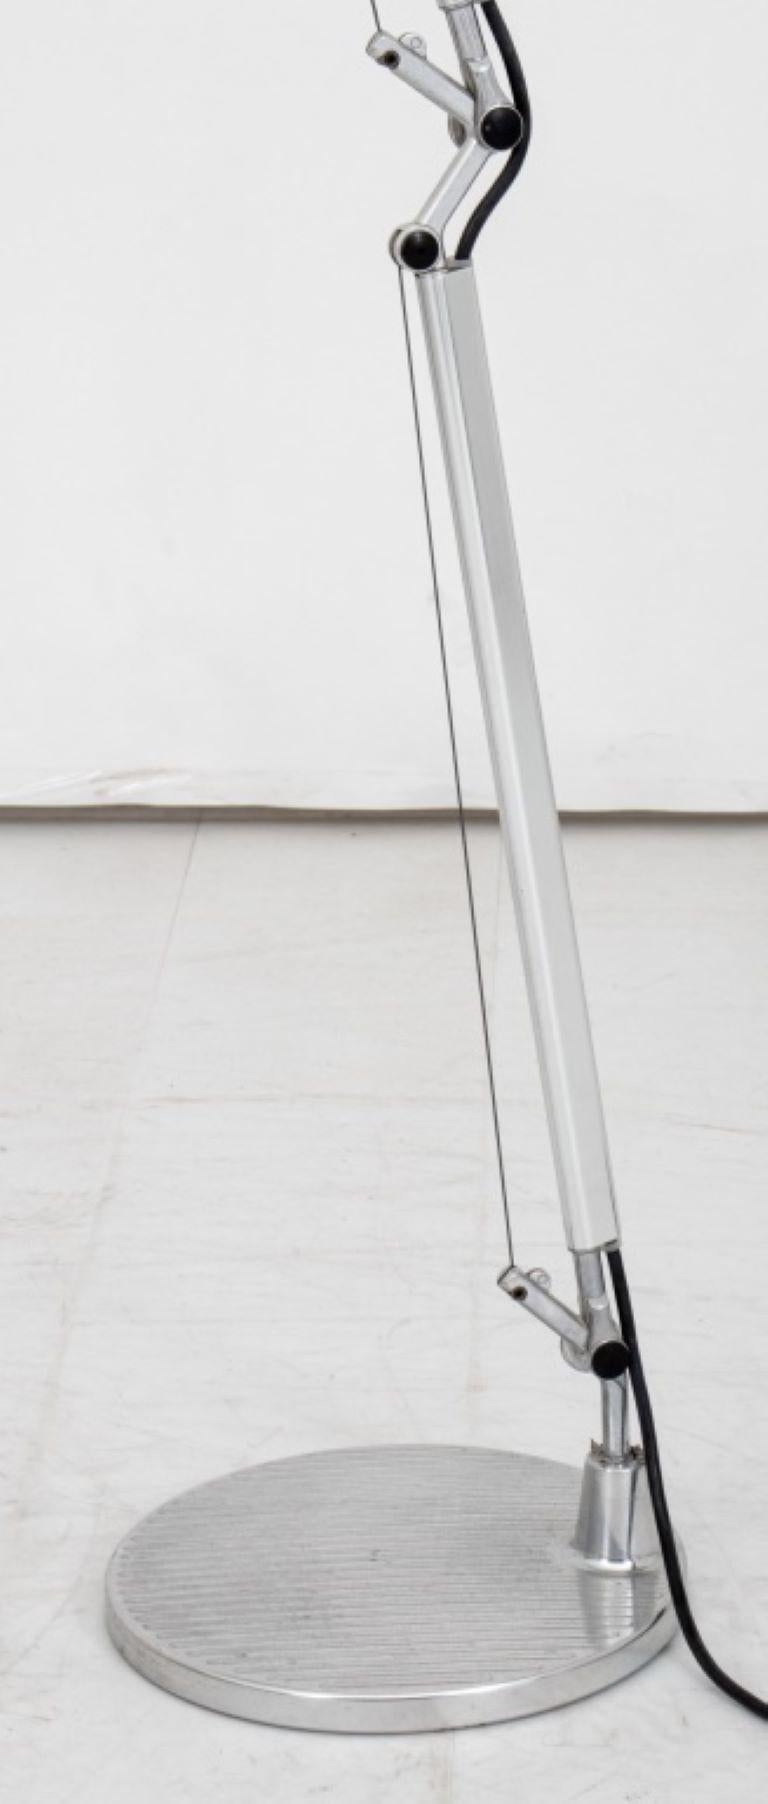 Artemide Tolomeo Adjustable Aluminium Table Lamp, design attibuted to Michele de Lucchi and Giancarlo Fassina, marked 